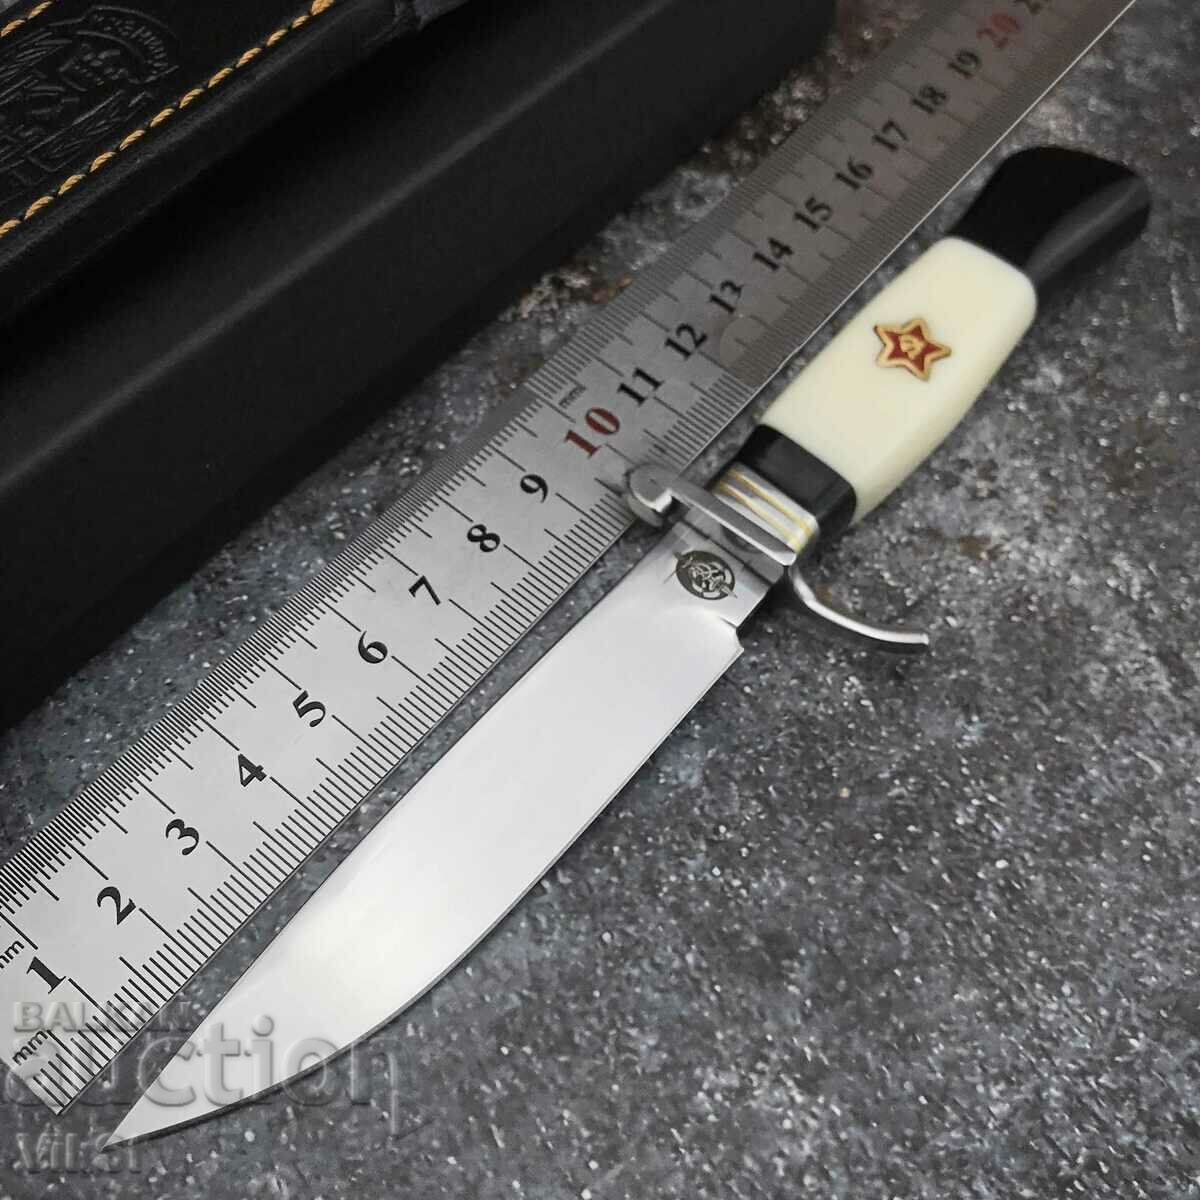 Knife with fixed blade Finka 127x244 mm